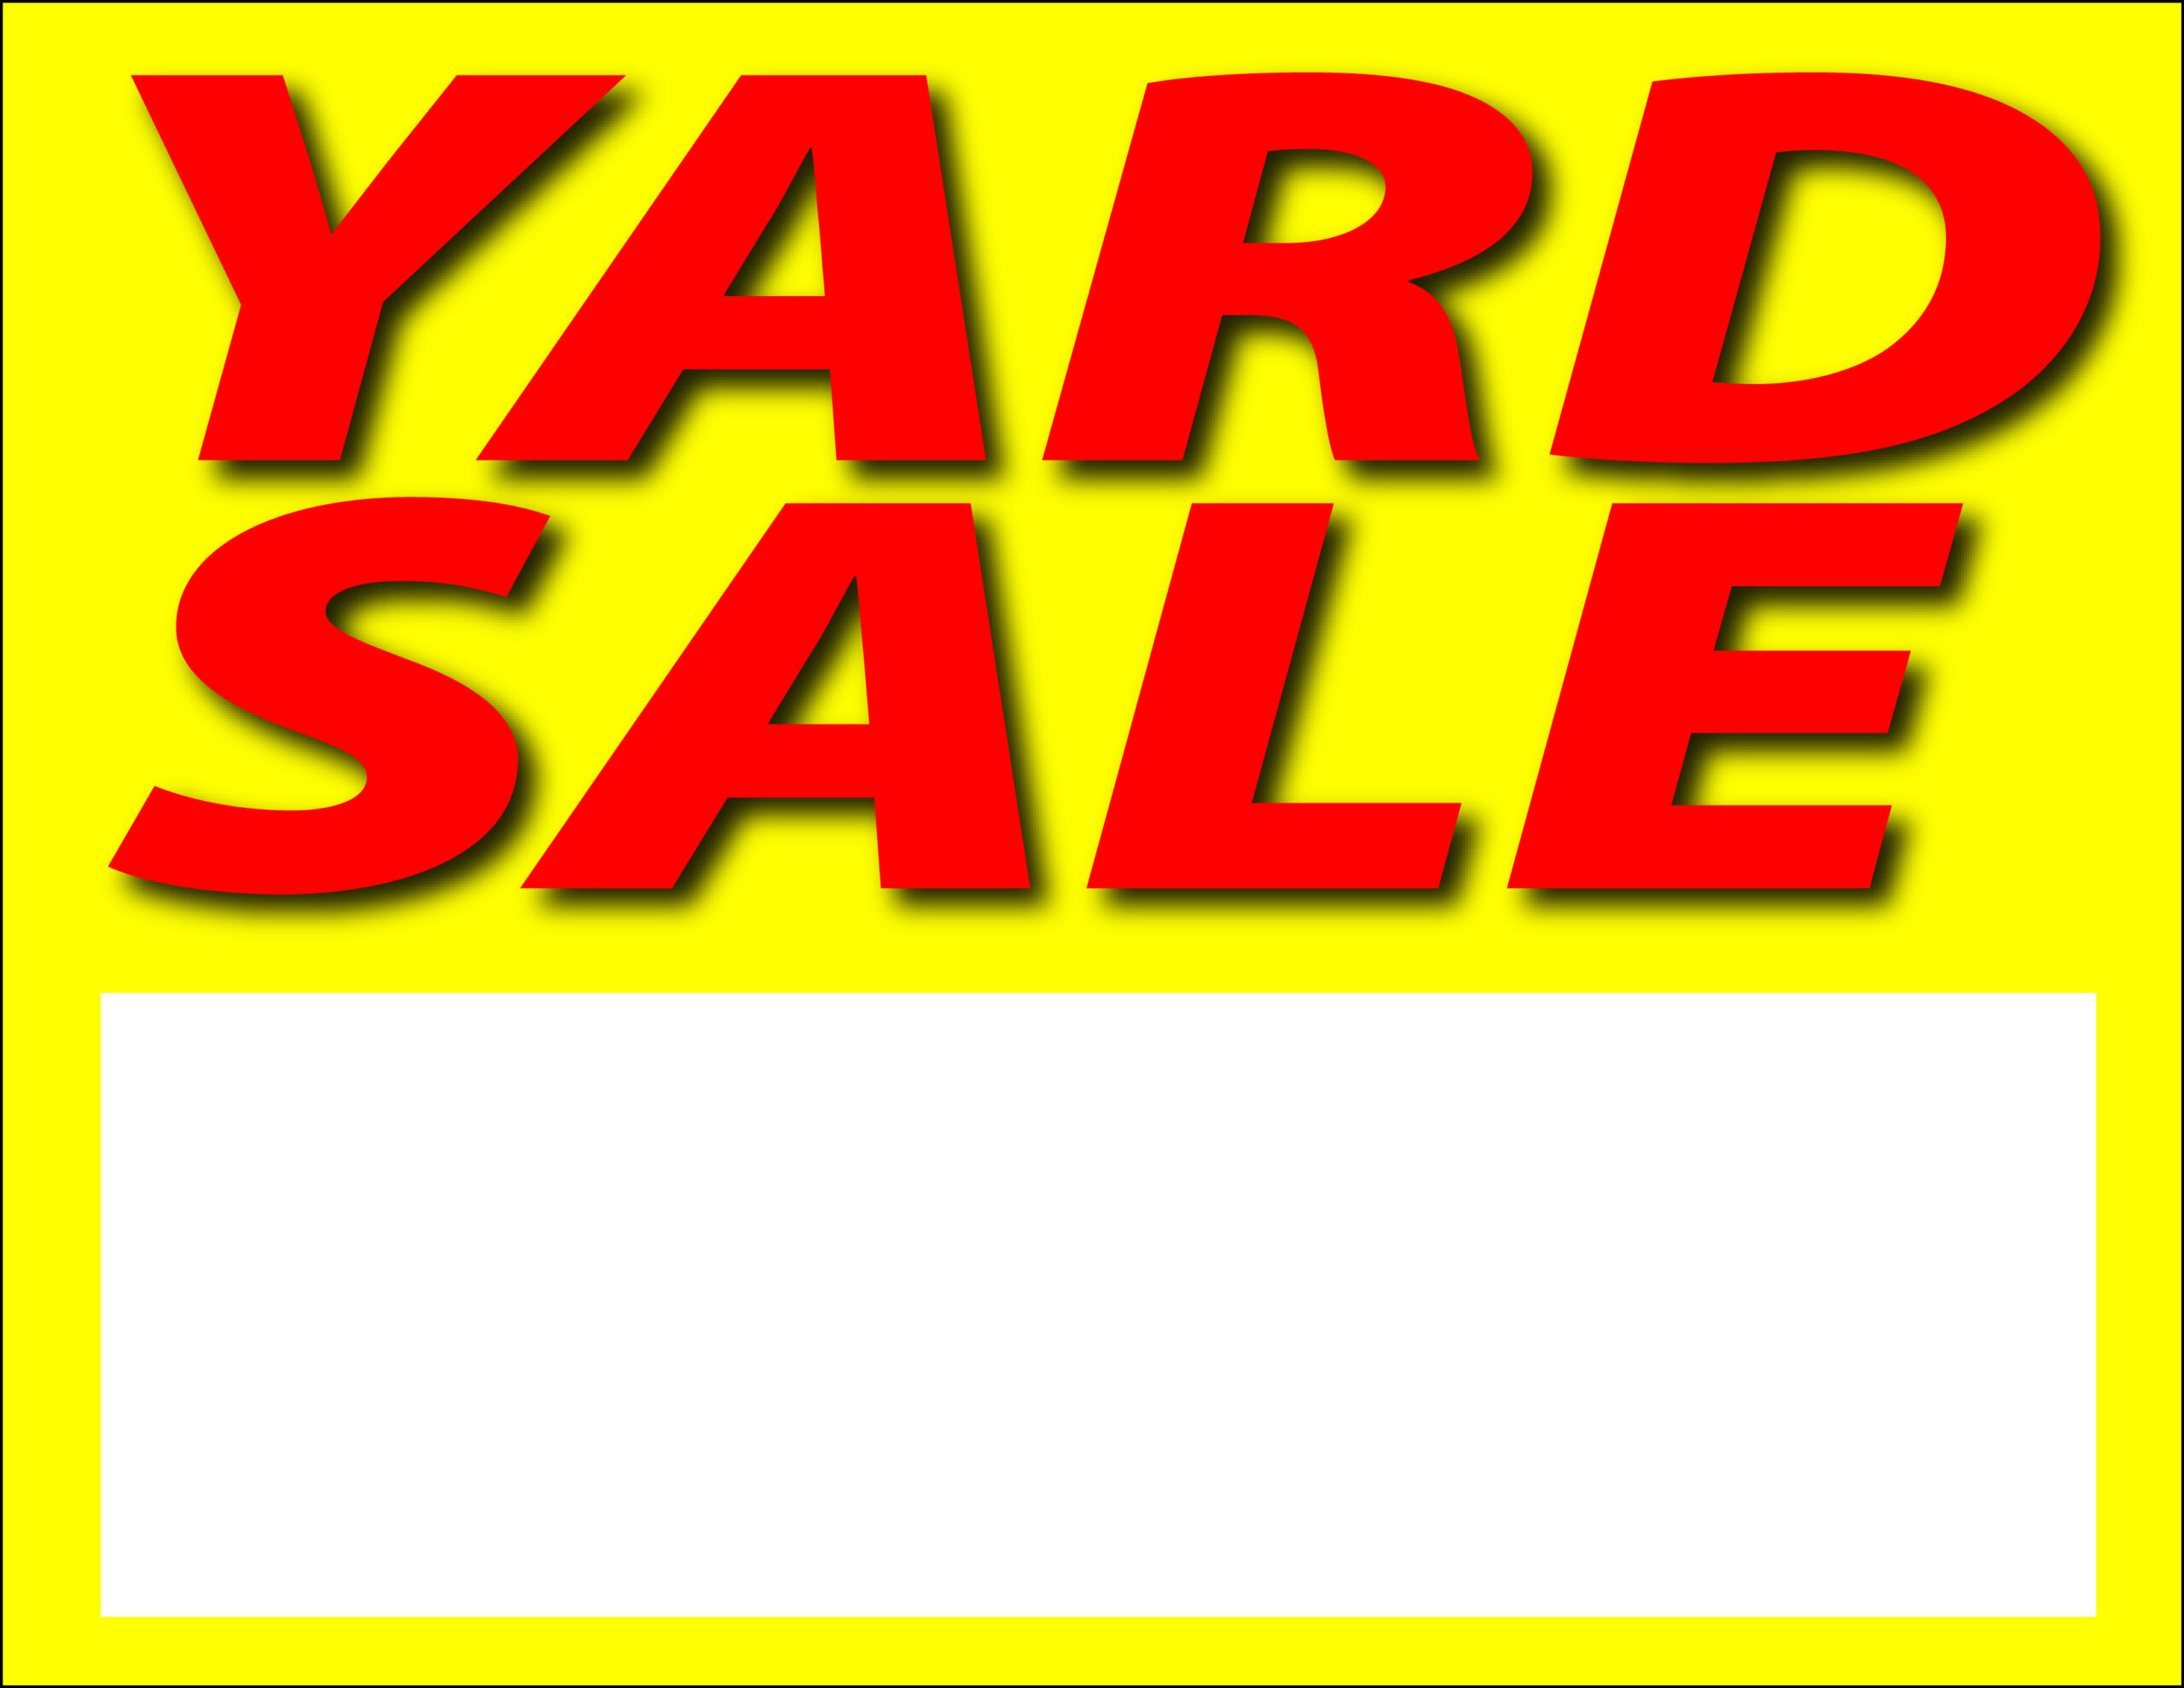 Yard Sale Sign ClipArt Best